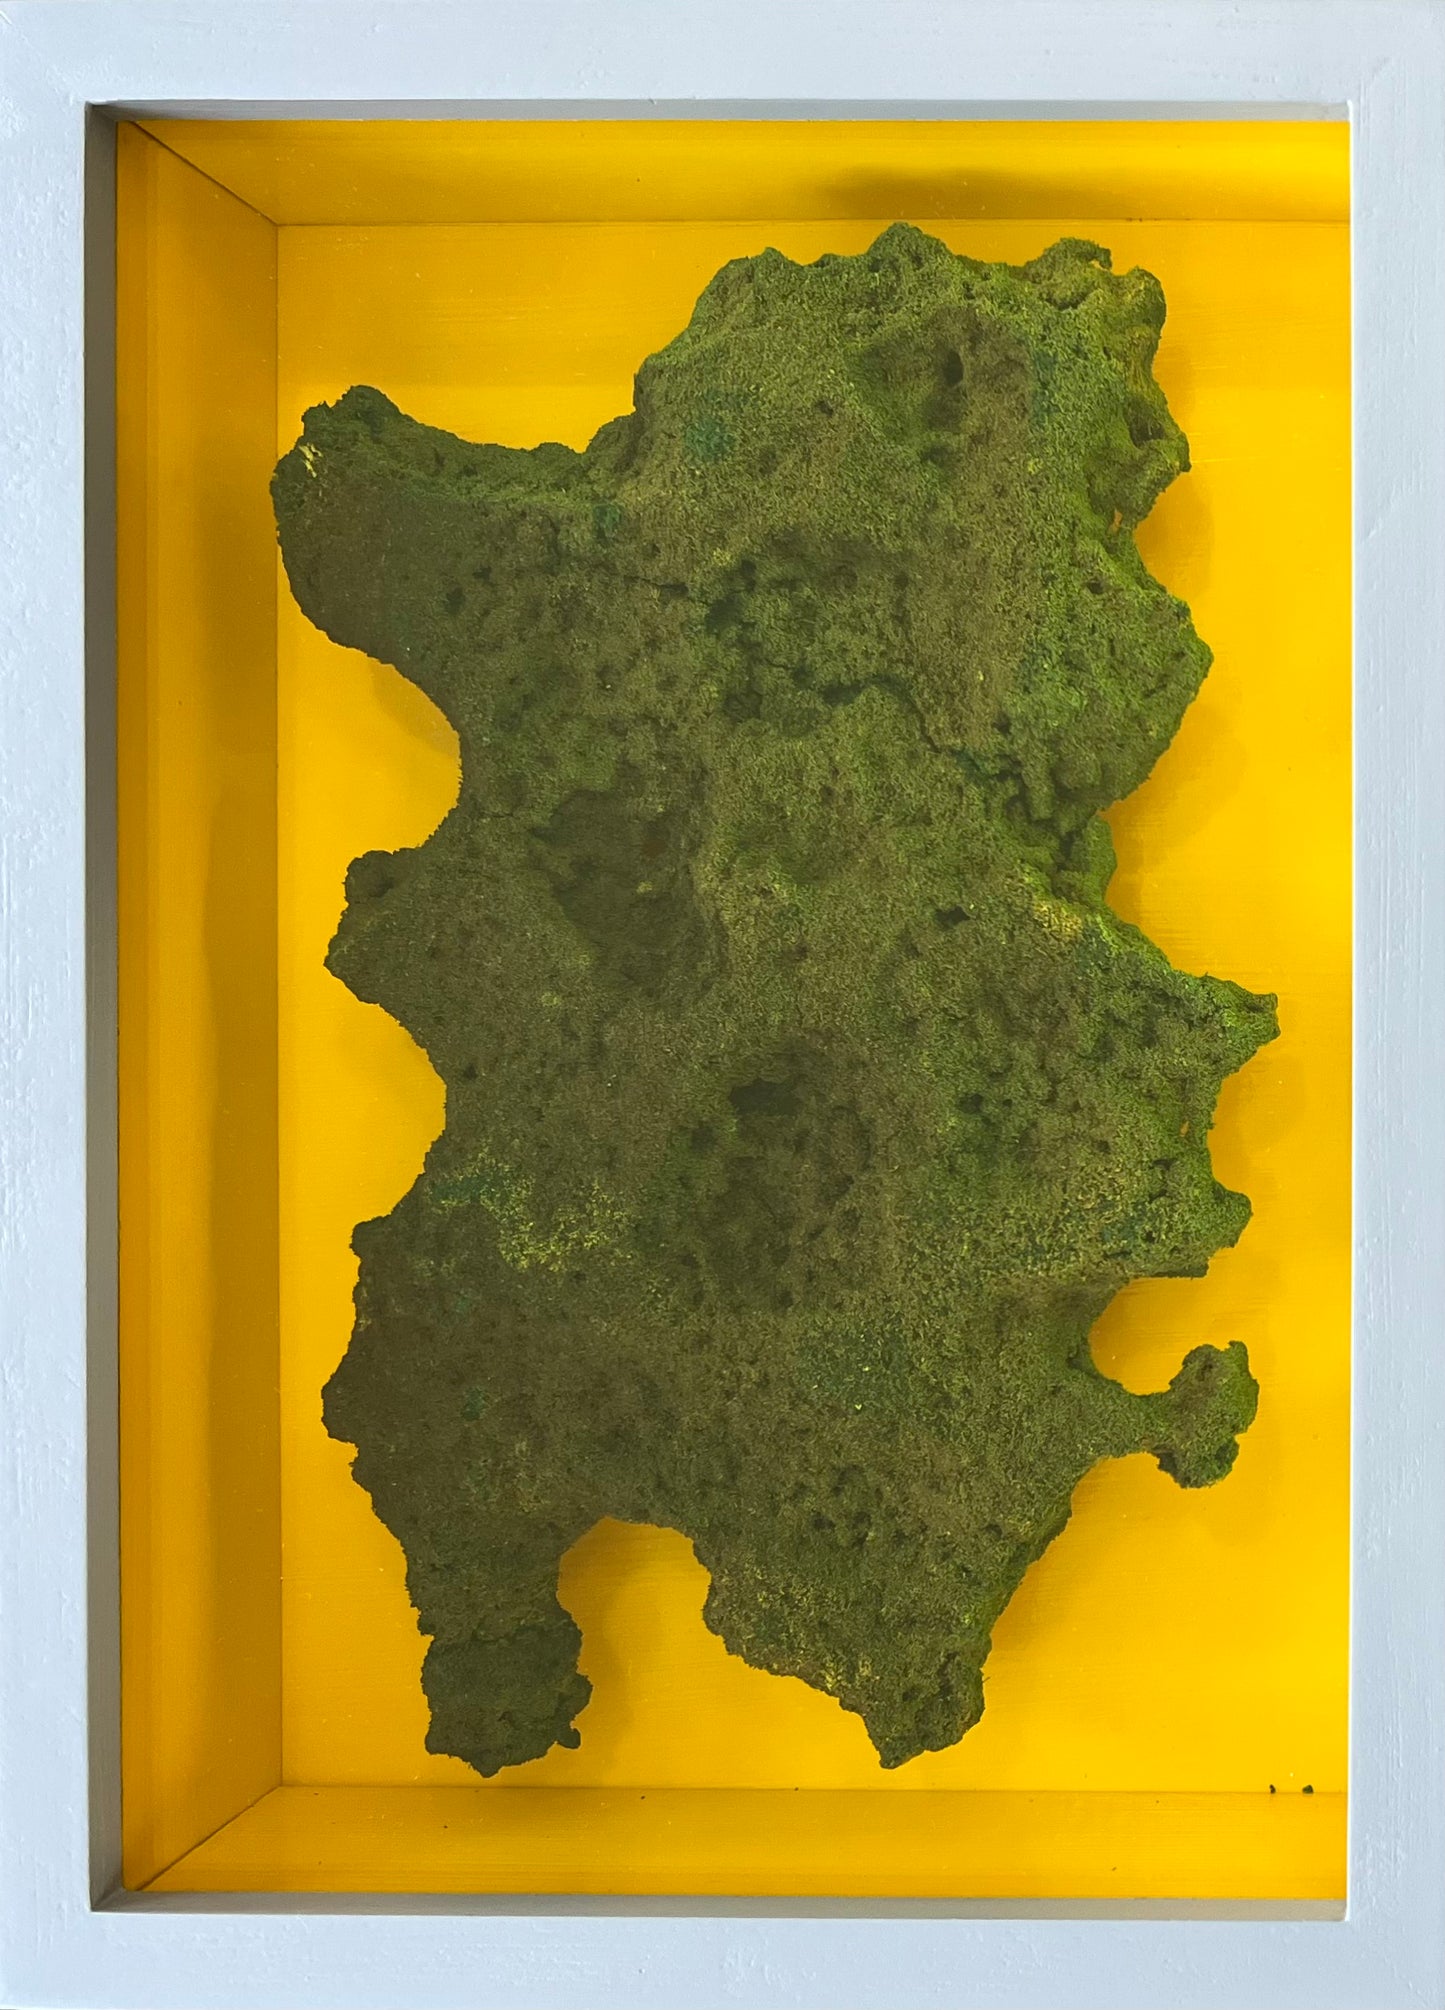 Thomas Lunden. "Fried landscape", 2014